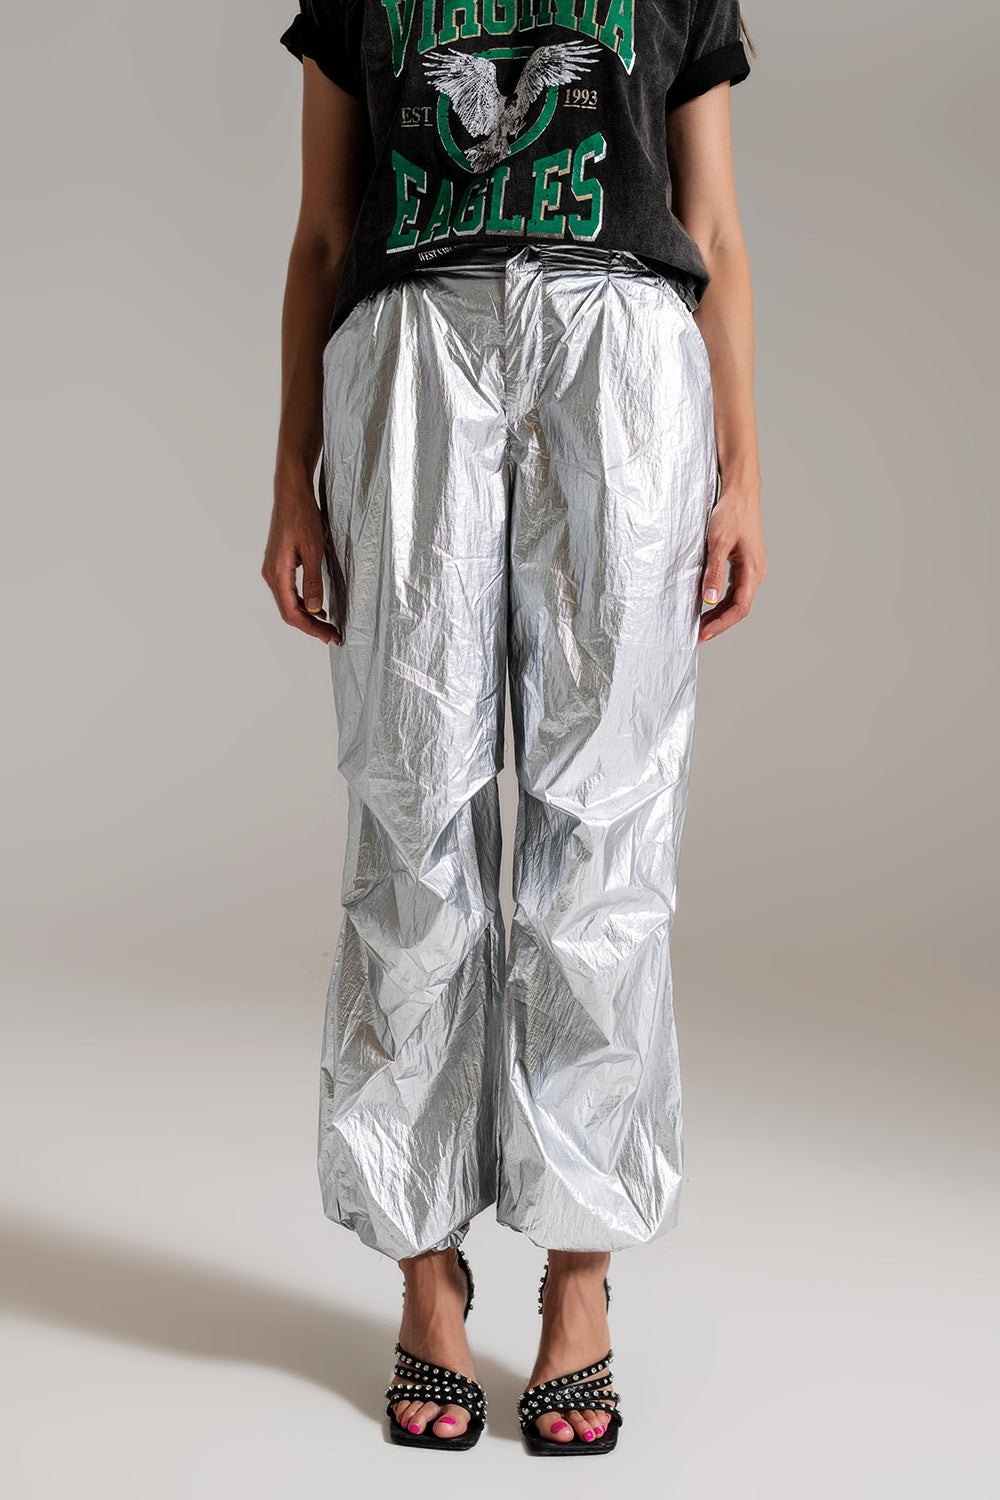 Q2 Pantaloni metallici con paracadute argentati oversize